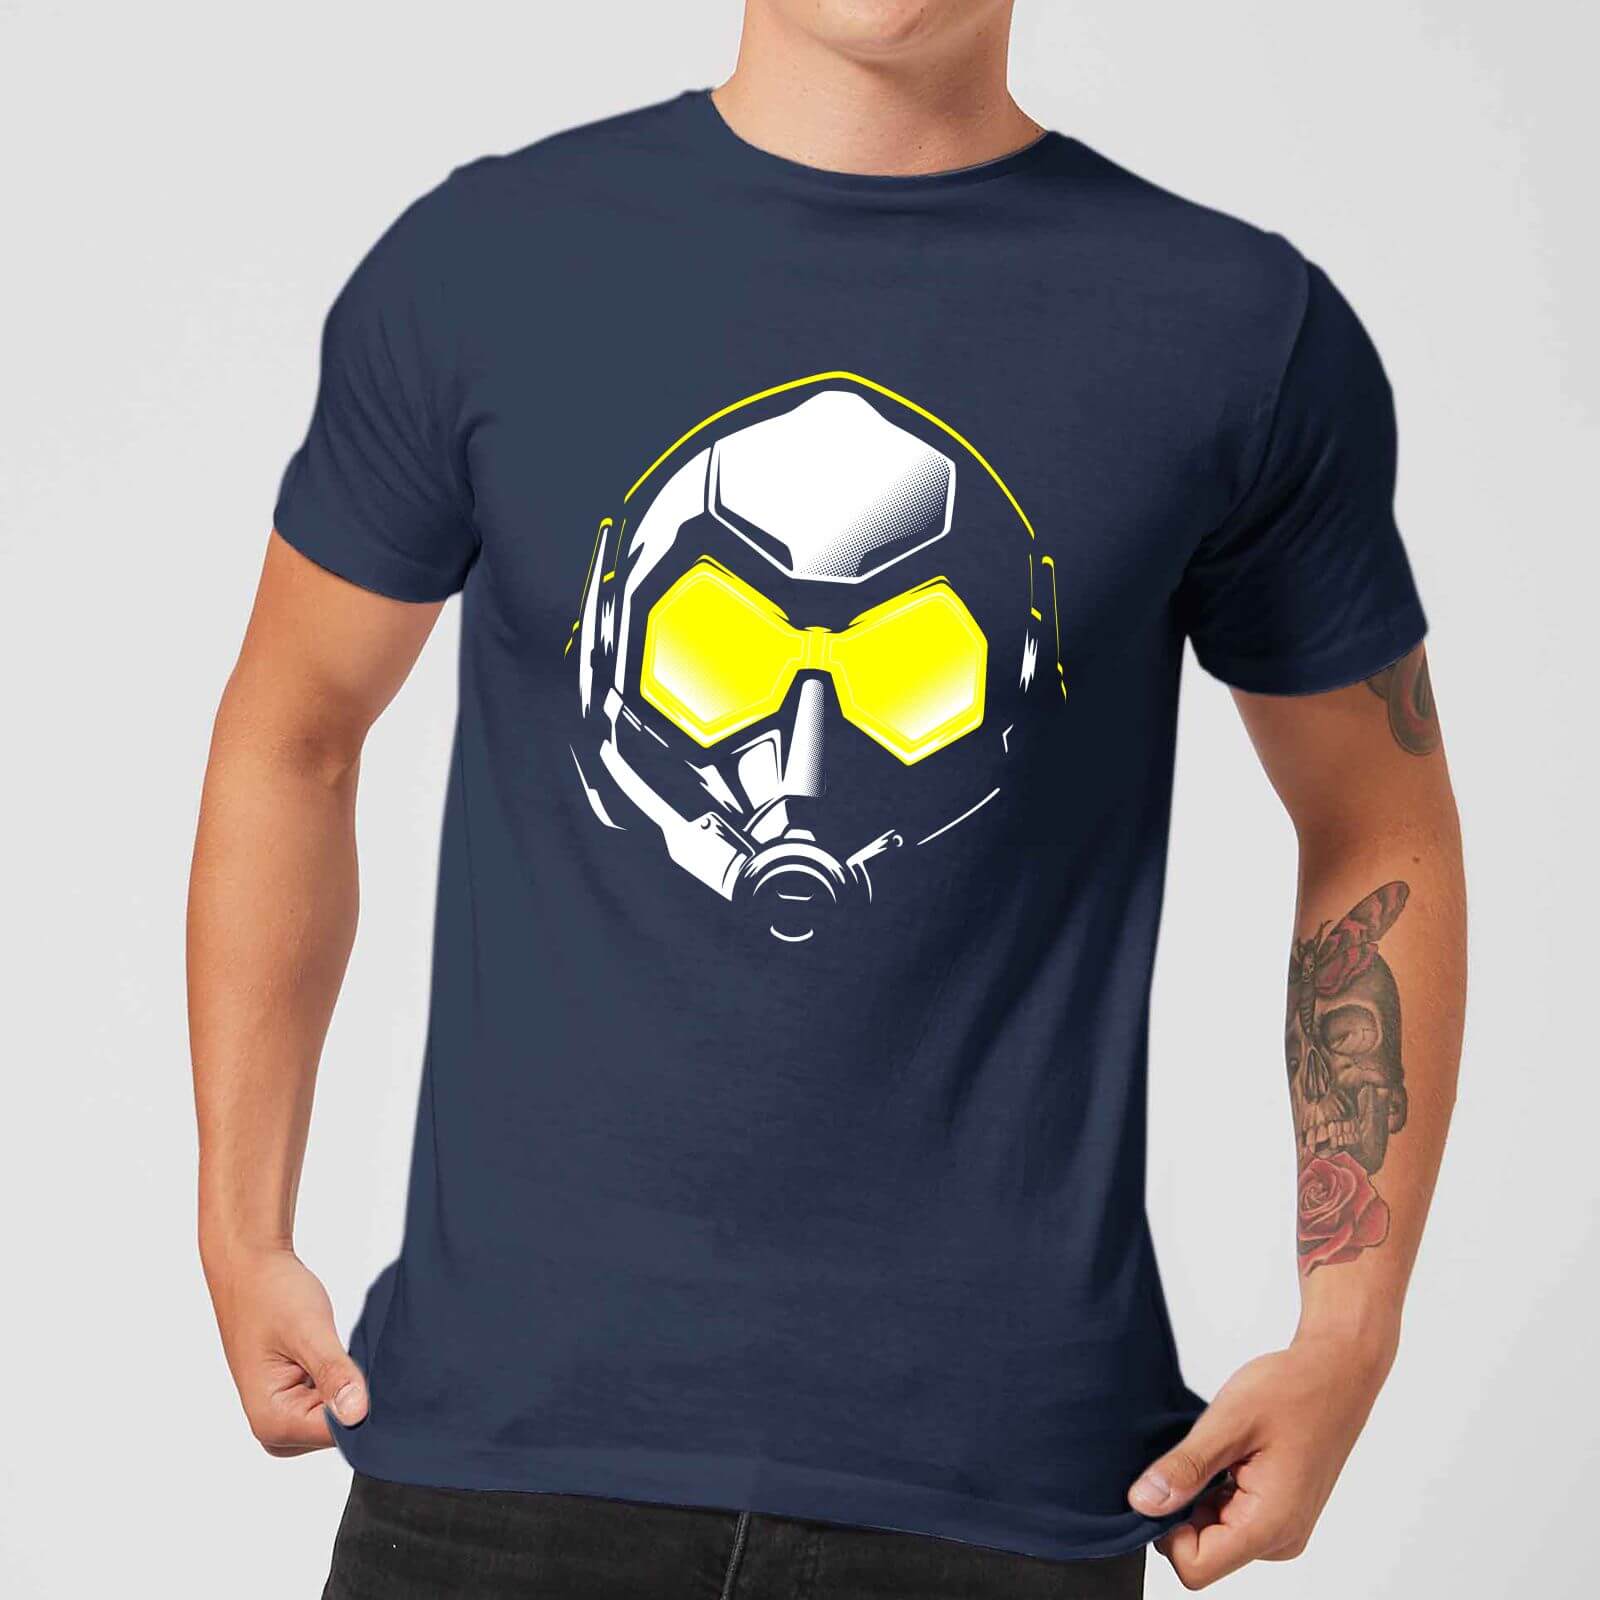 Ant-Man And The Wasp Hope Mask Herren T-Shirt - Navy Blau - S